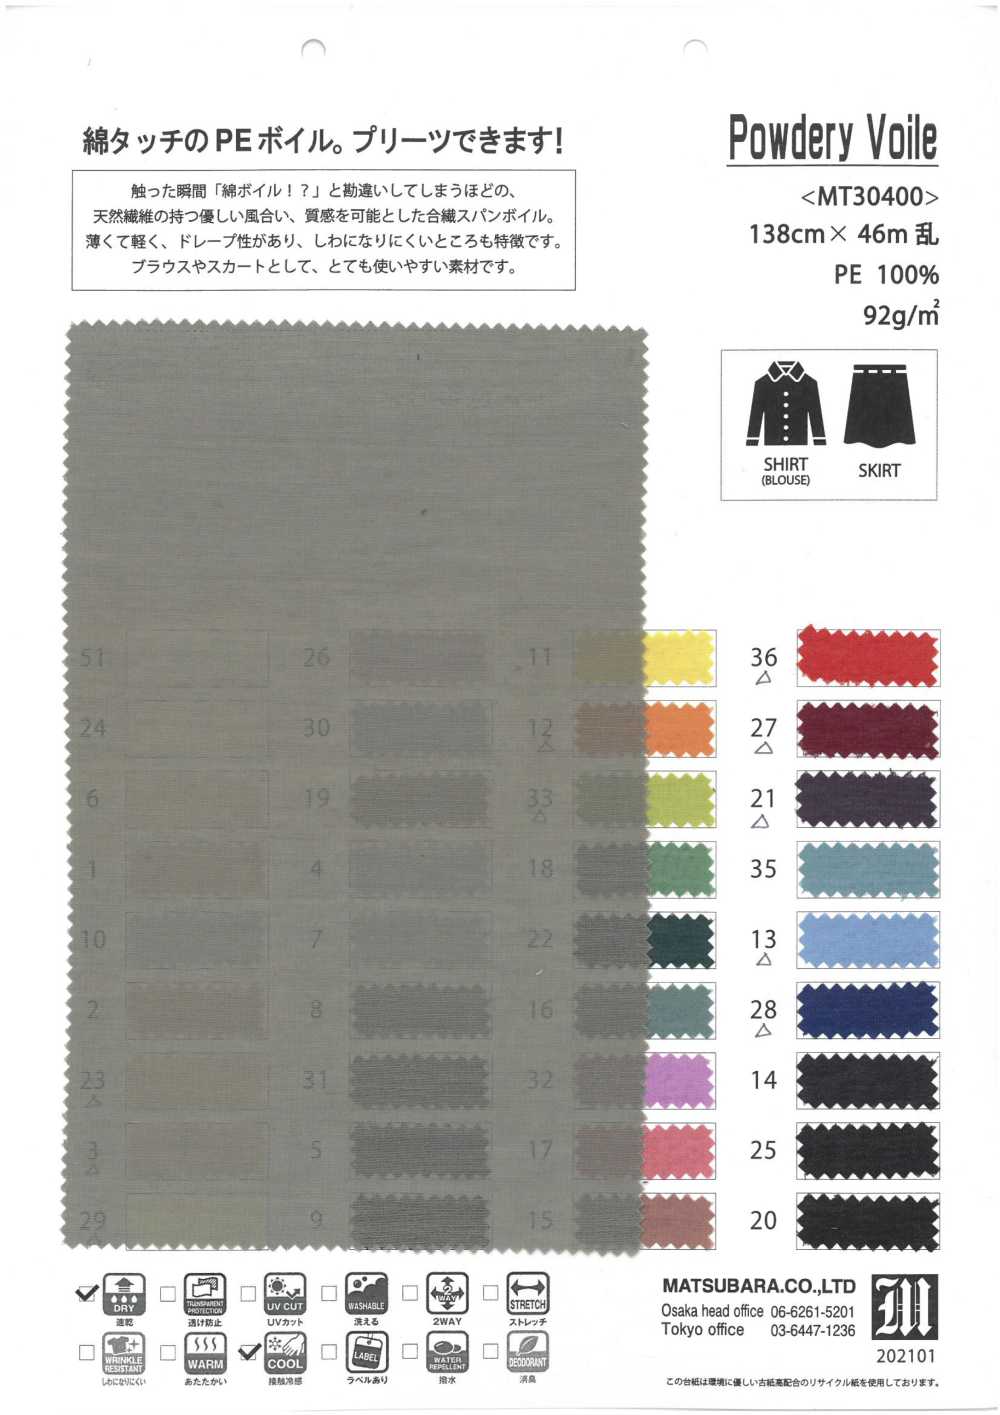 MT30400 Powdery Voile[Textile / Fabric] Matsubara